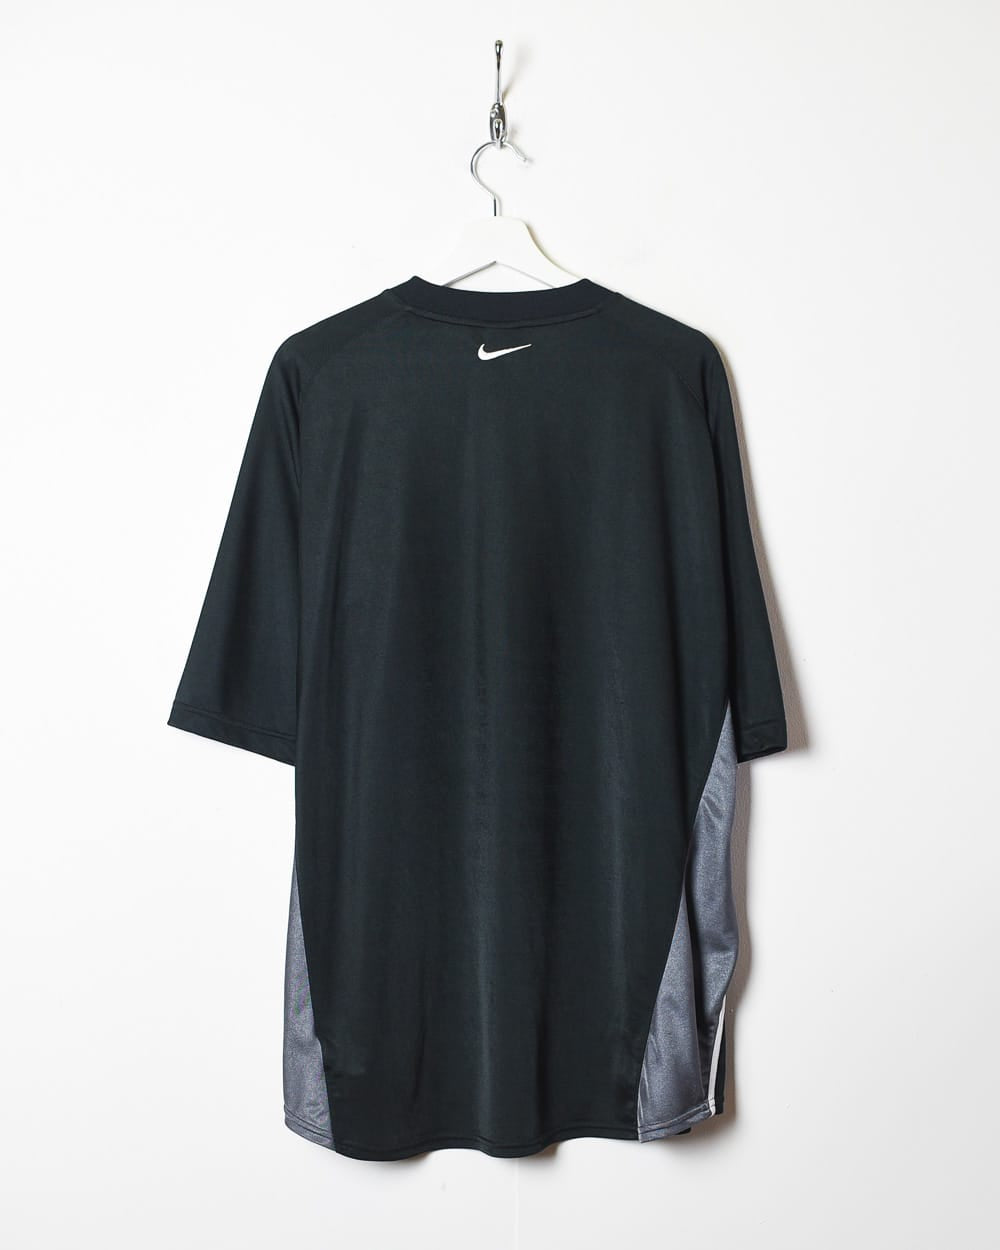 Black Nike Total 90 T-Shirt - XX-Large